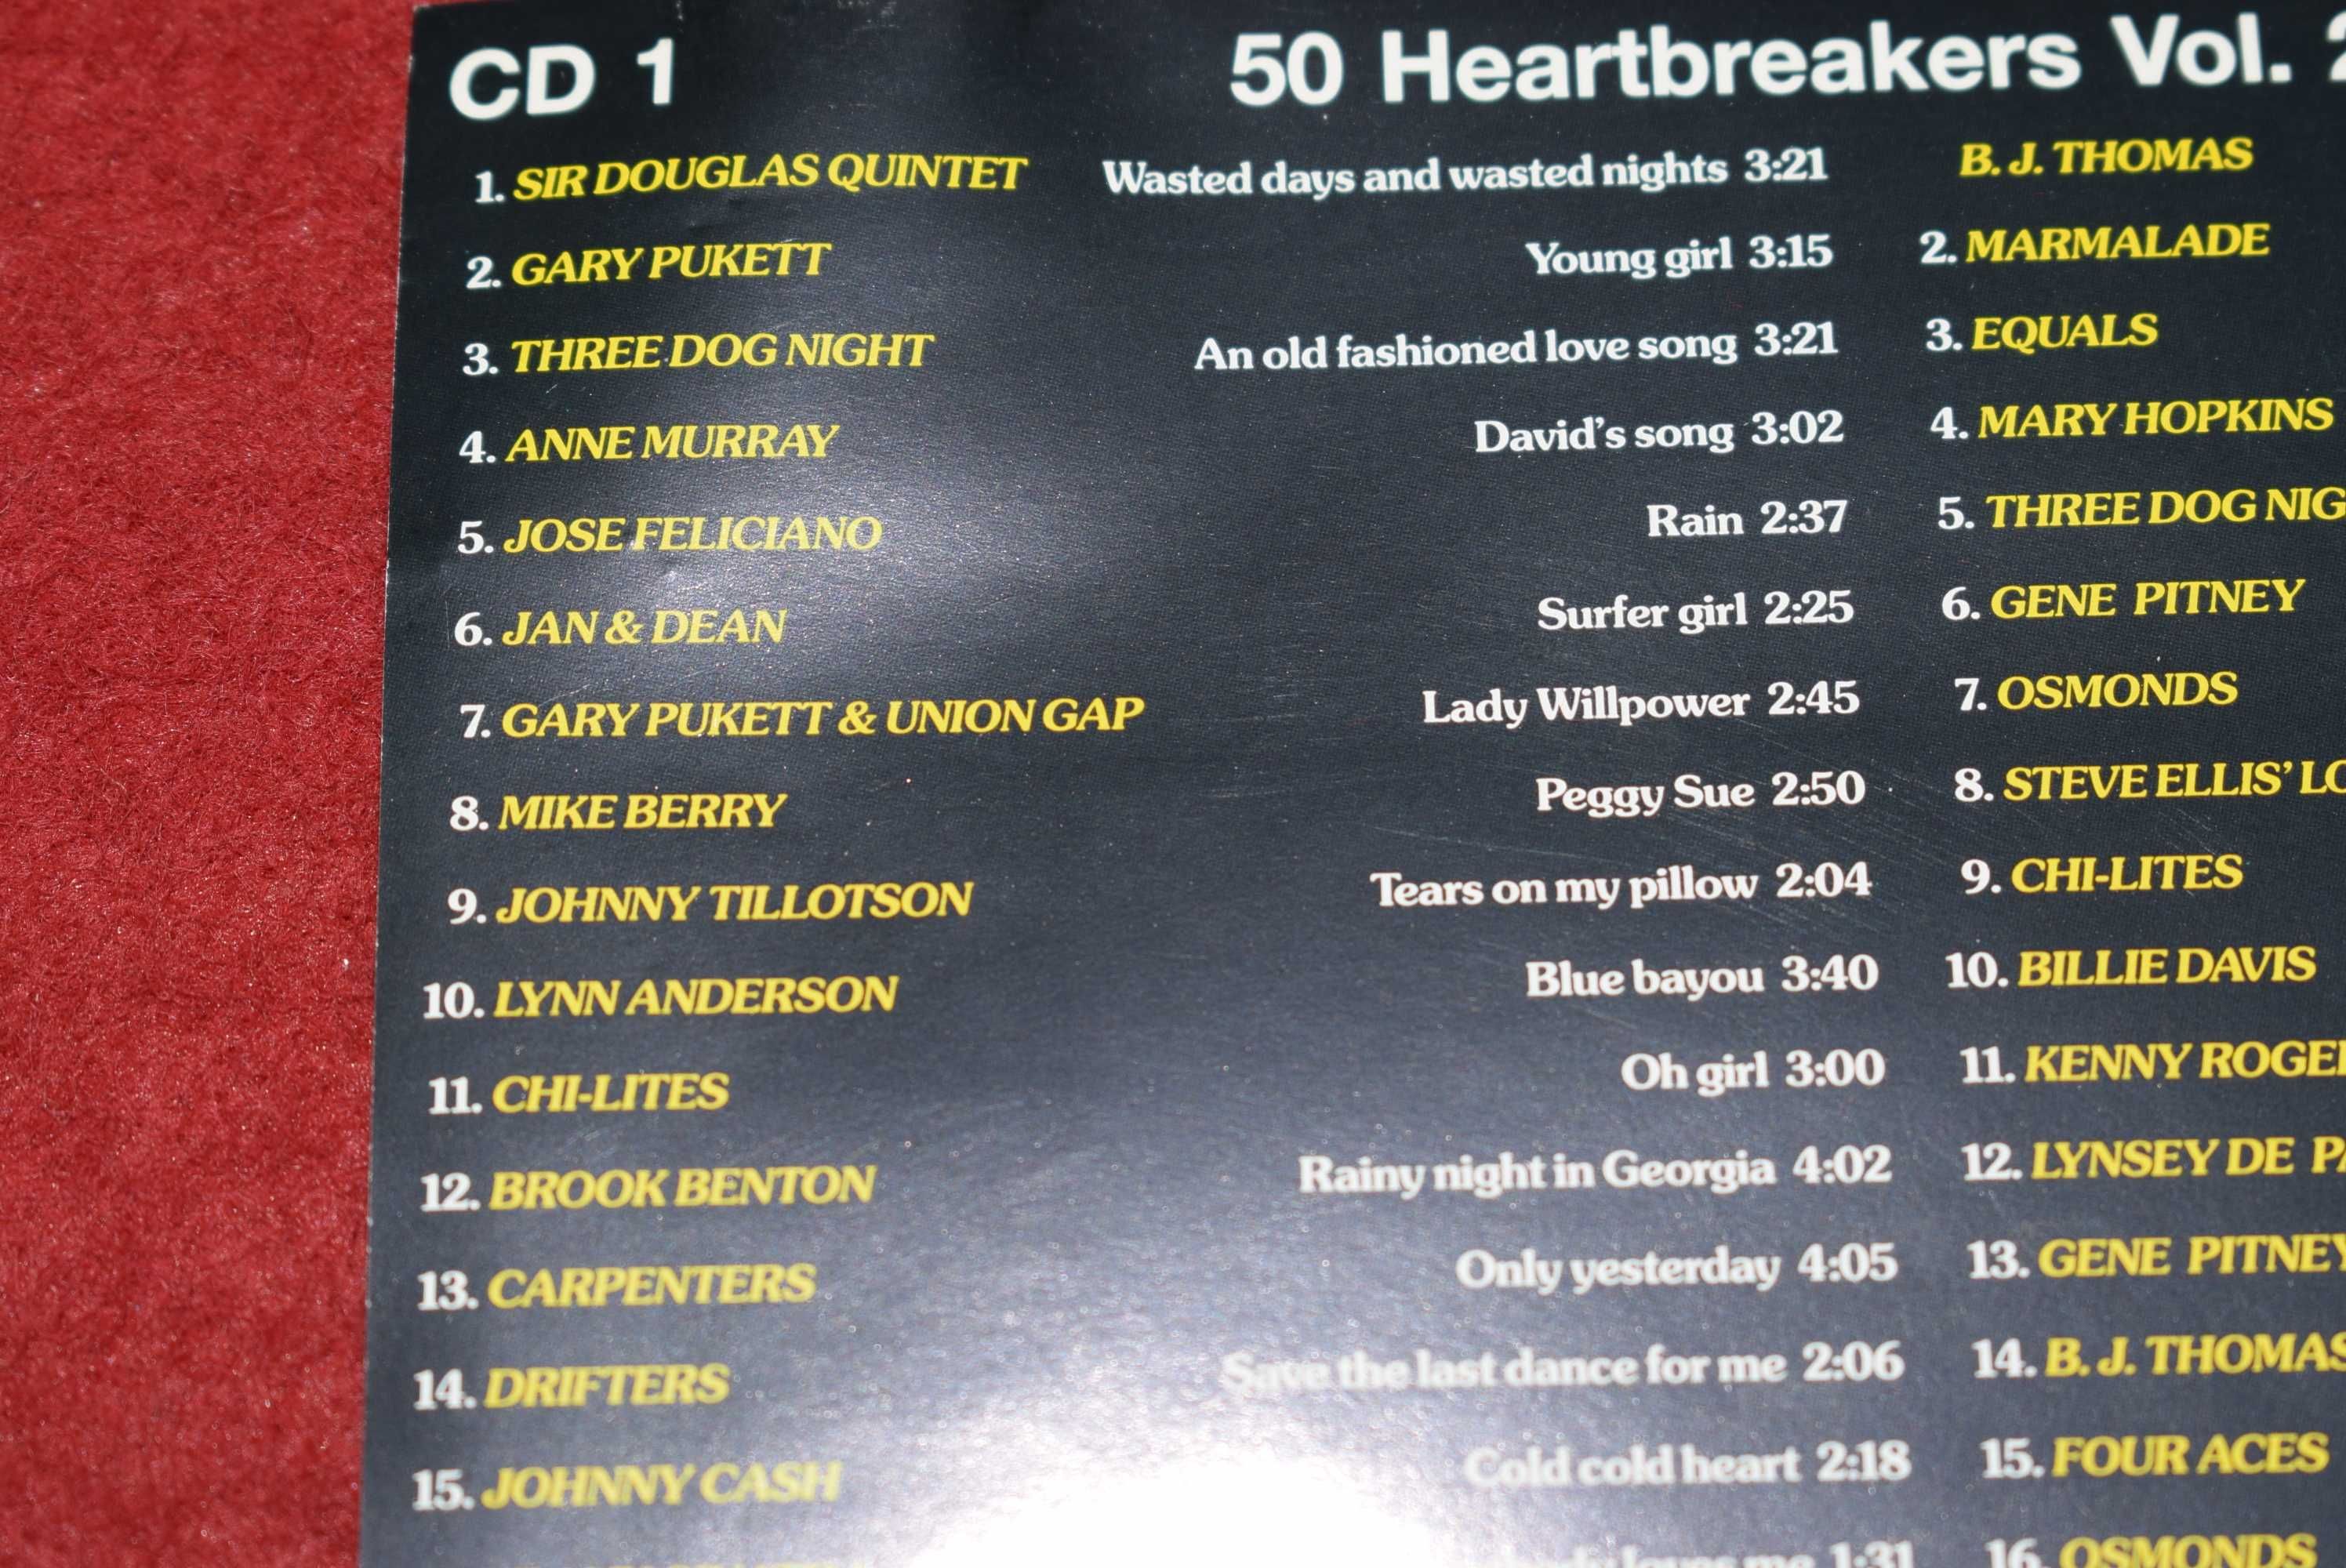 50 Heartbreakers Vol. 2 na dwóch płytach CD - 1999